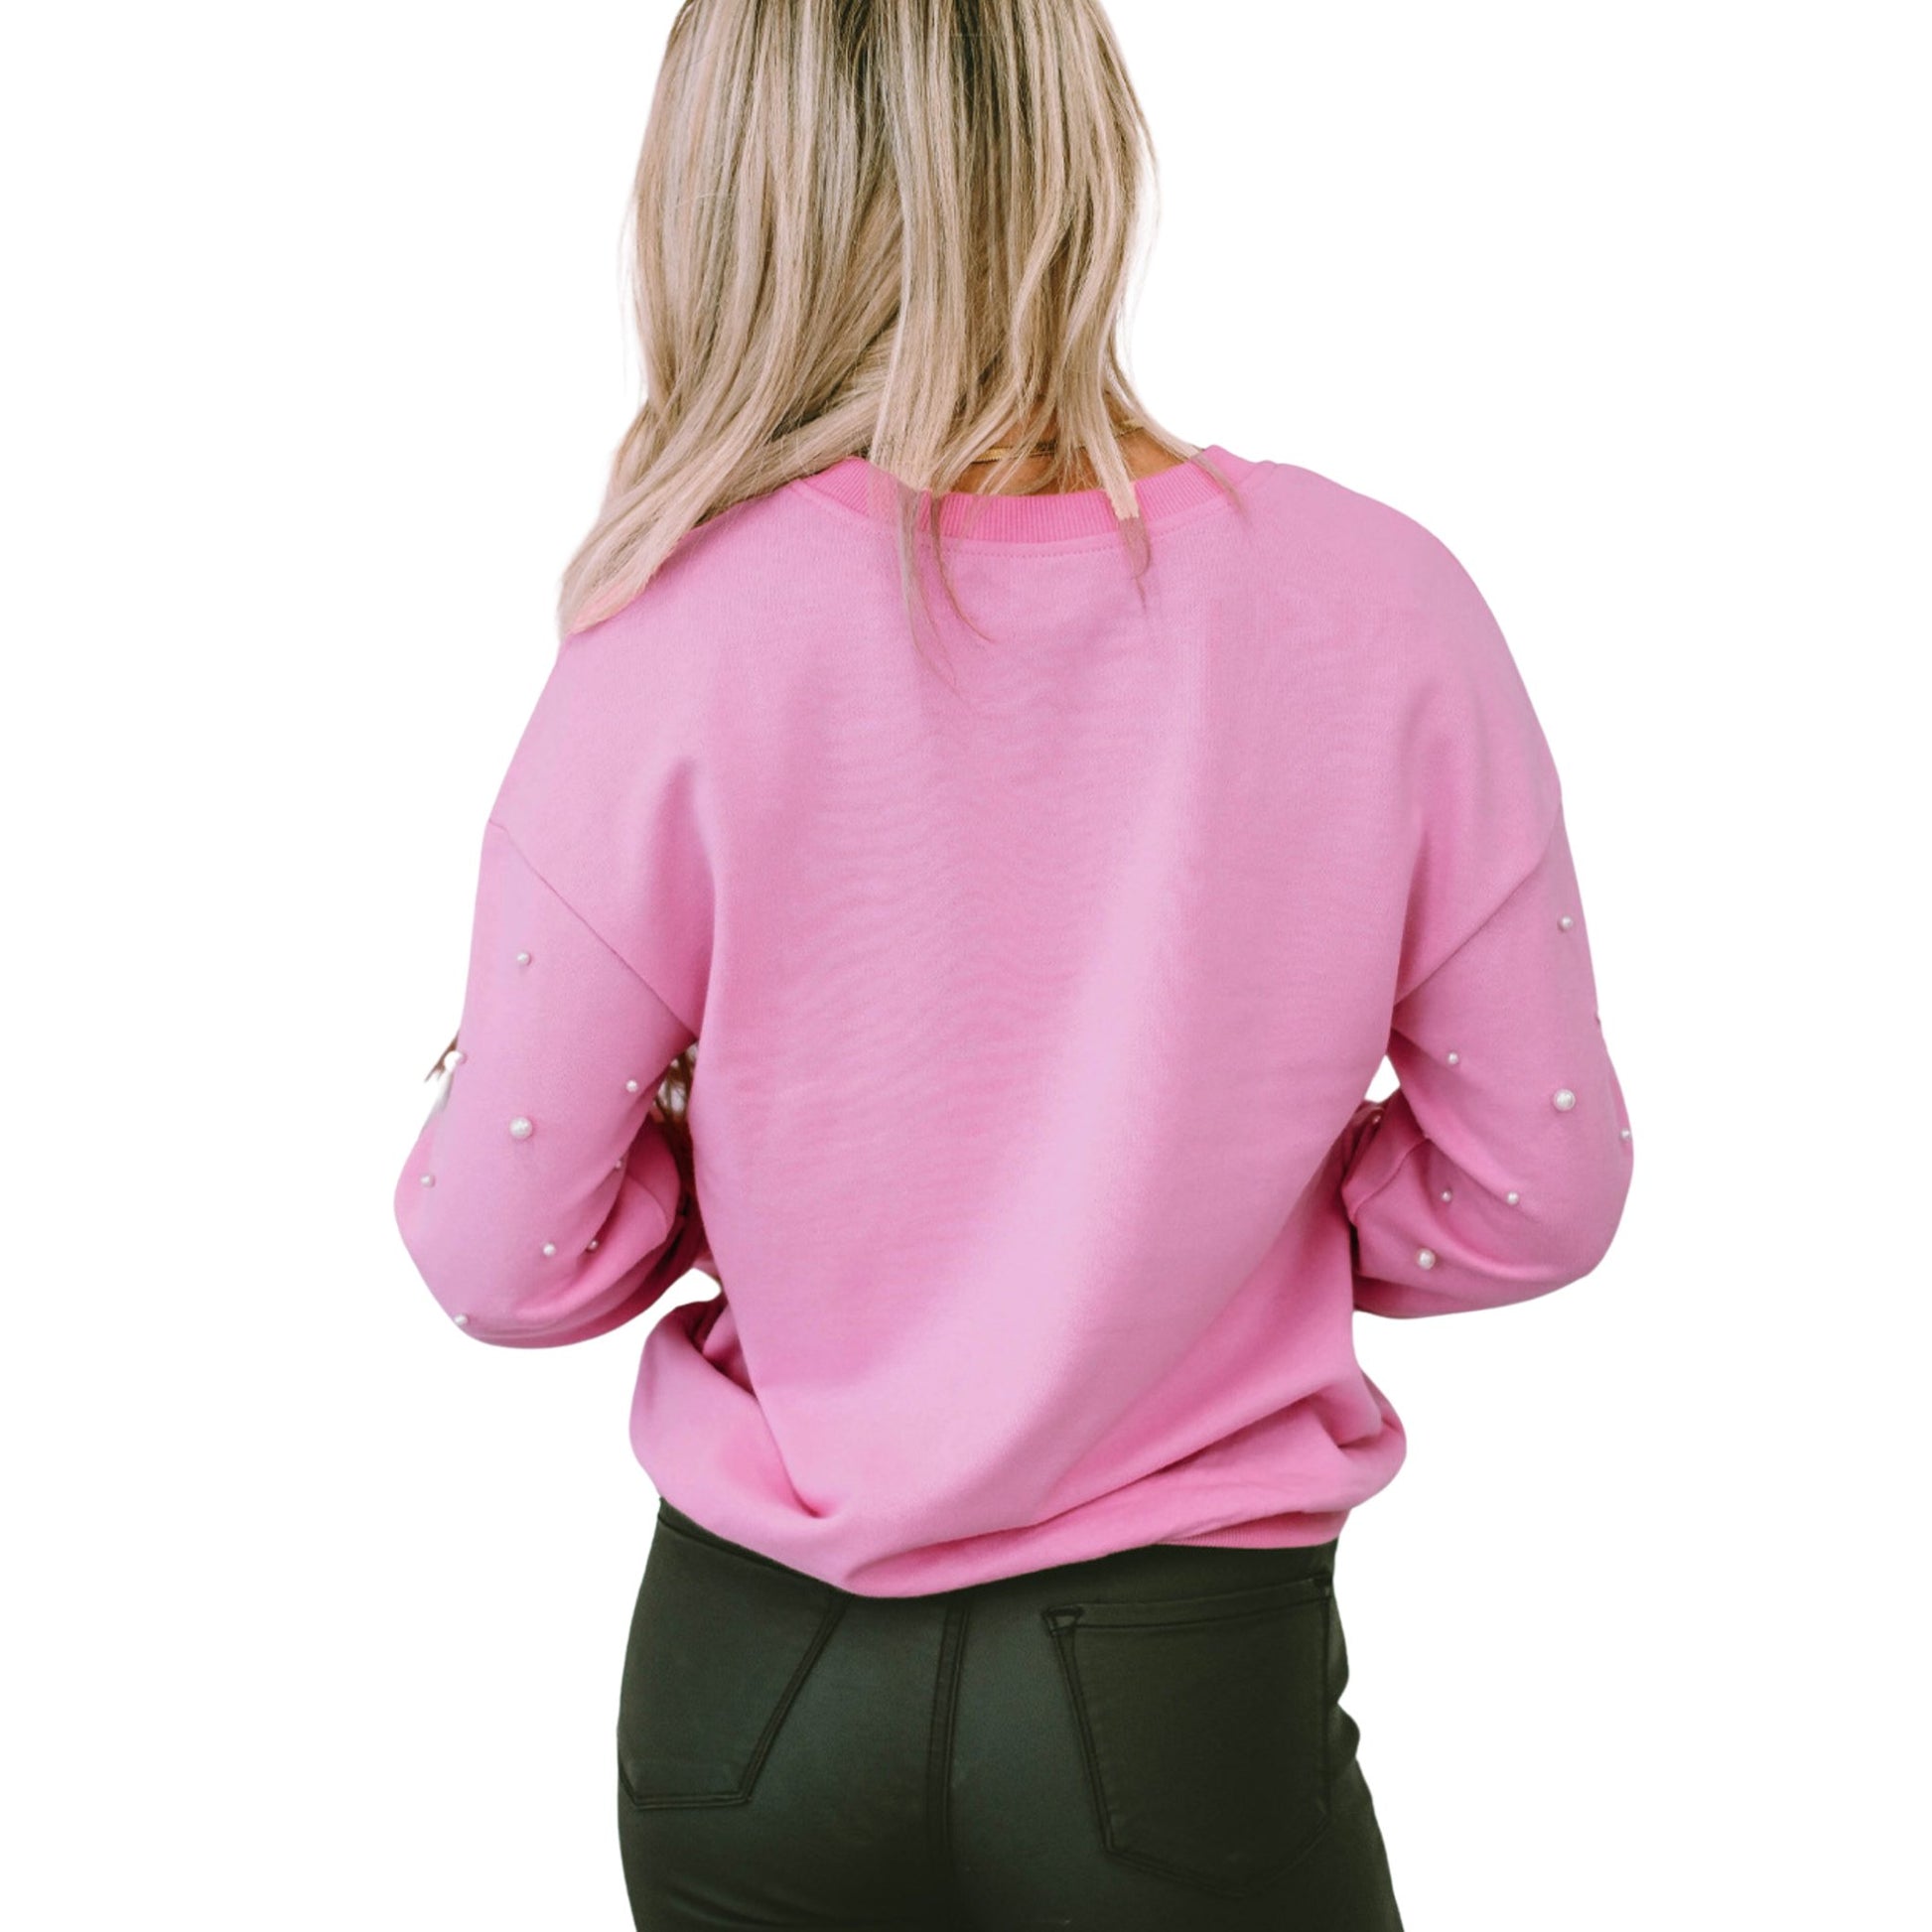 Pearl Pink Sweatshirt - Lavish life LLC 